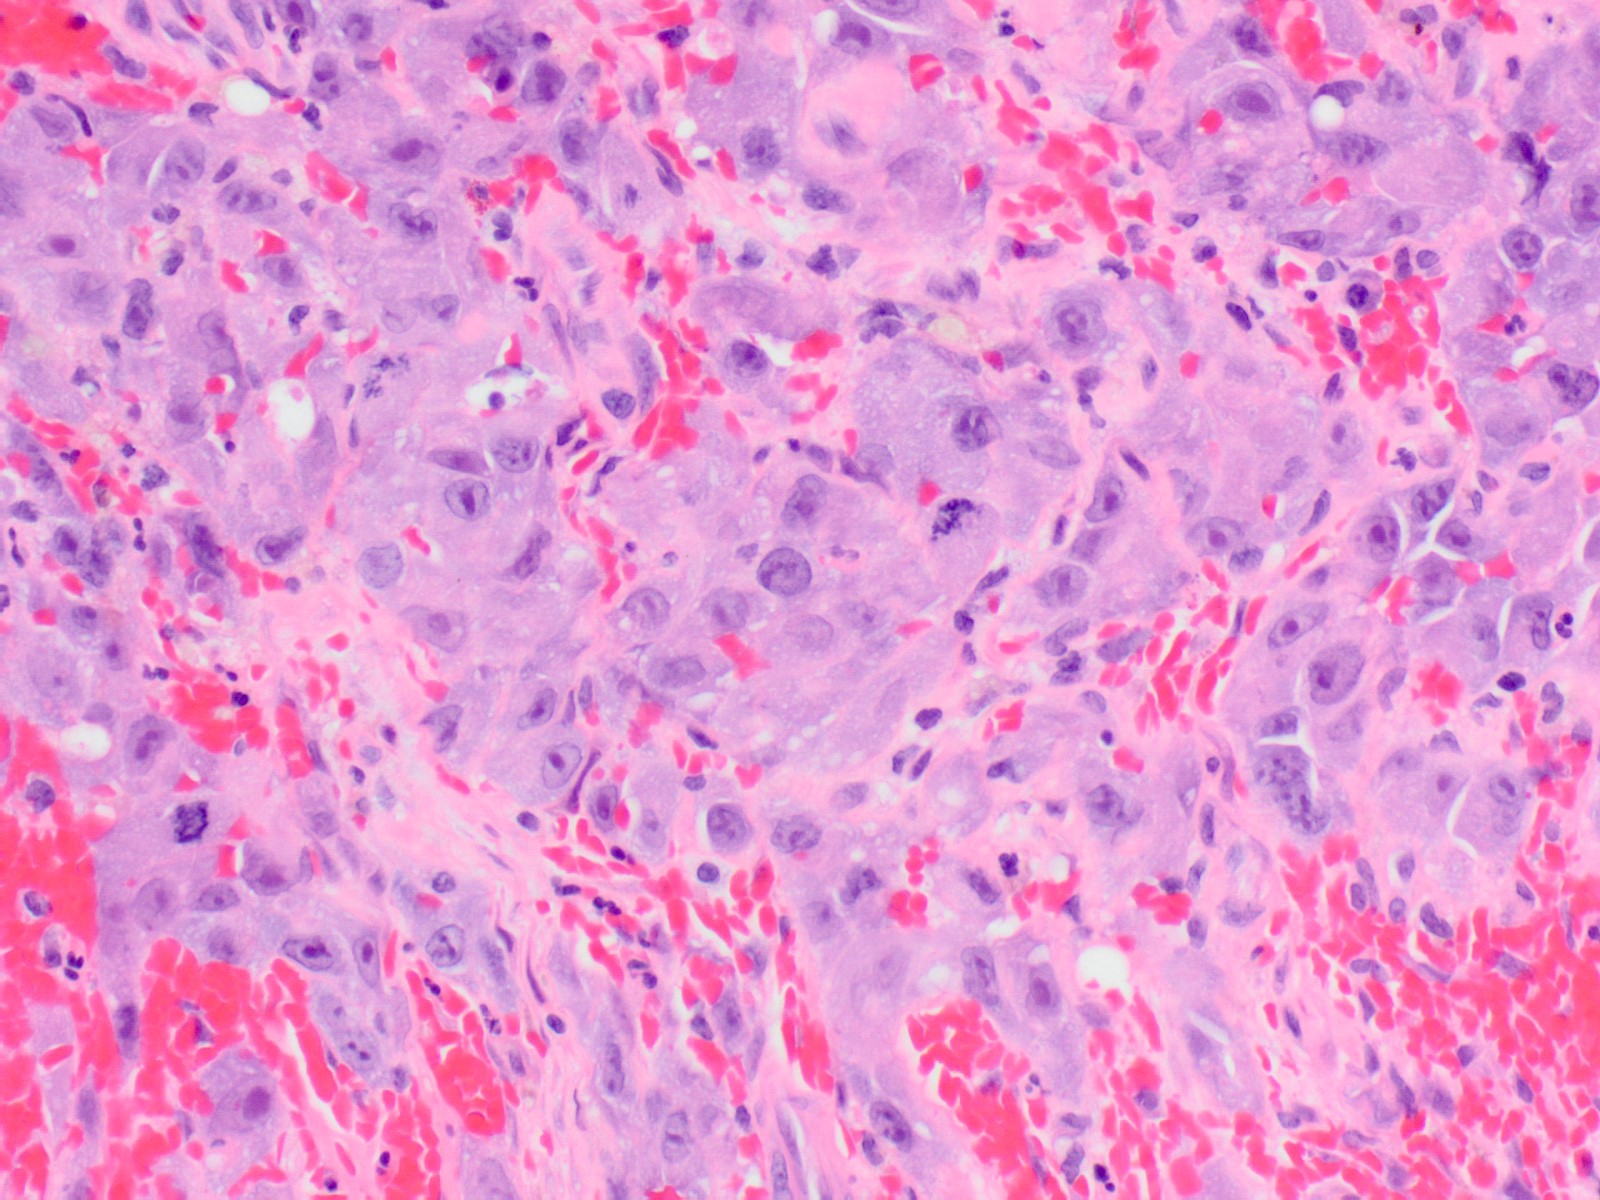 Epithelioid cells